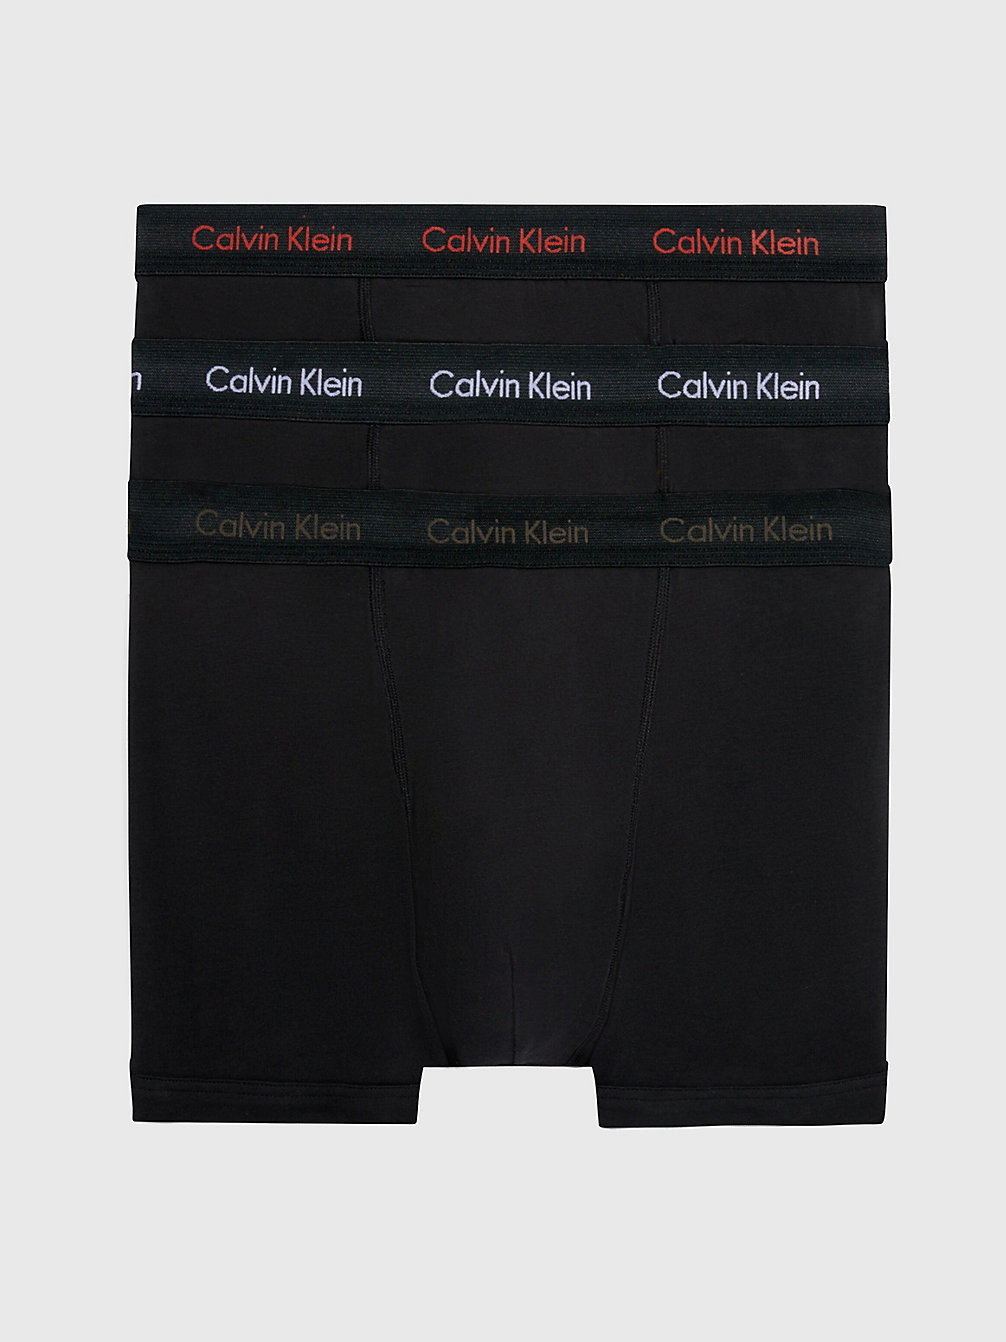 B-COOL MELON, GLXY GRY, BRN BELT LG 3 Pack Trunks - Cotton Stretch undefined men Calvin Klein